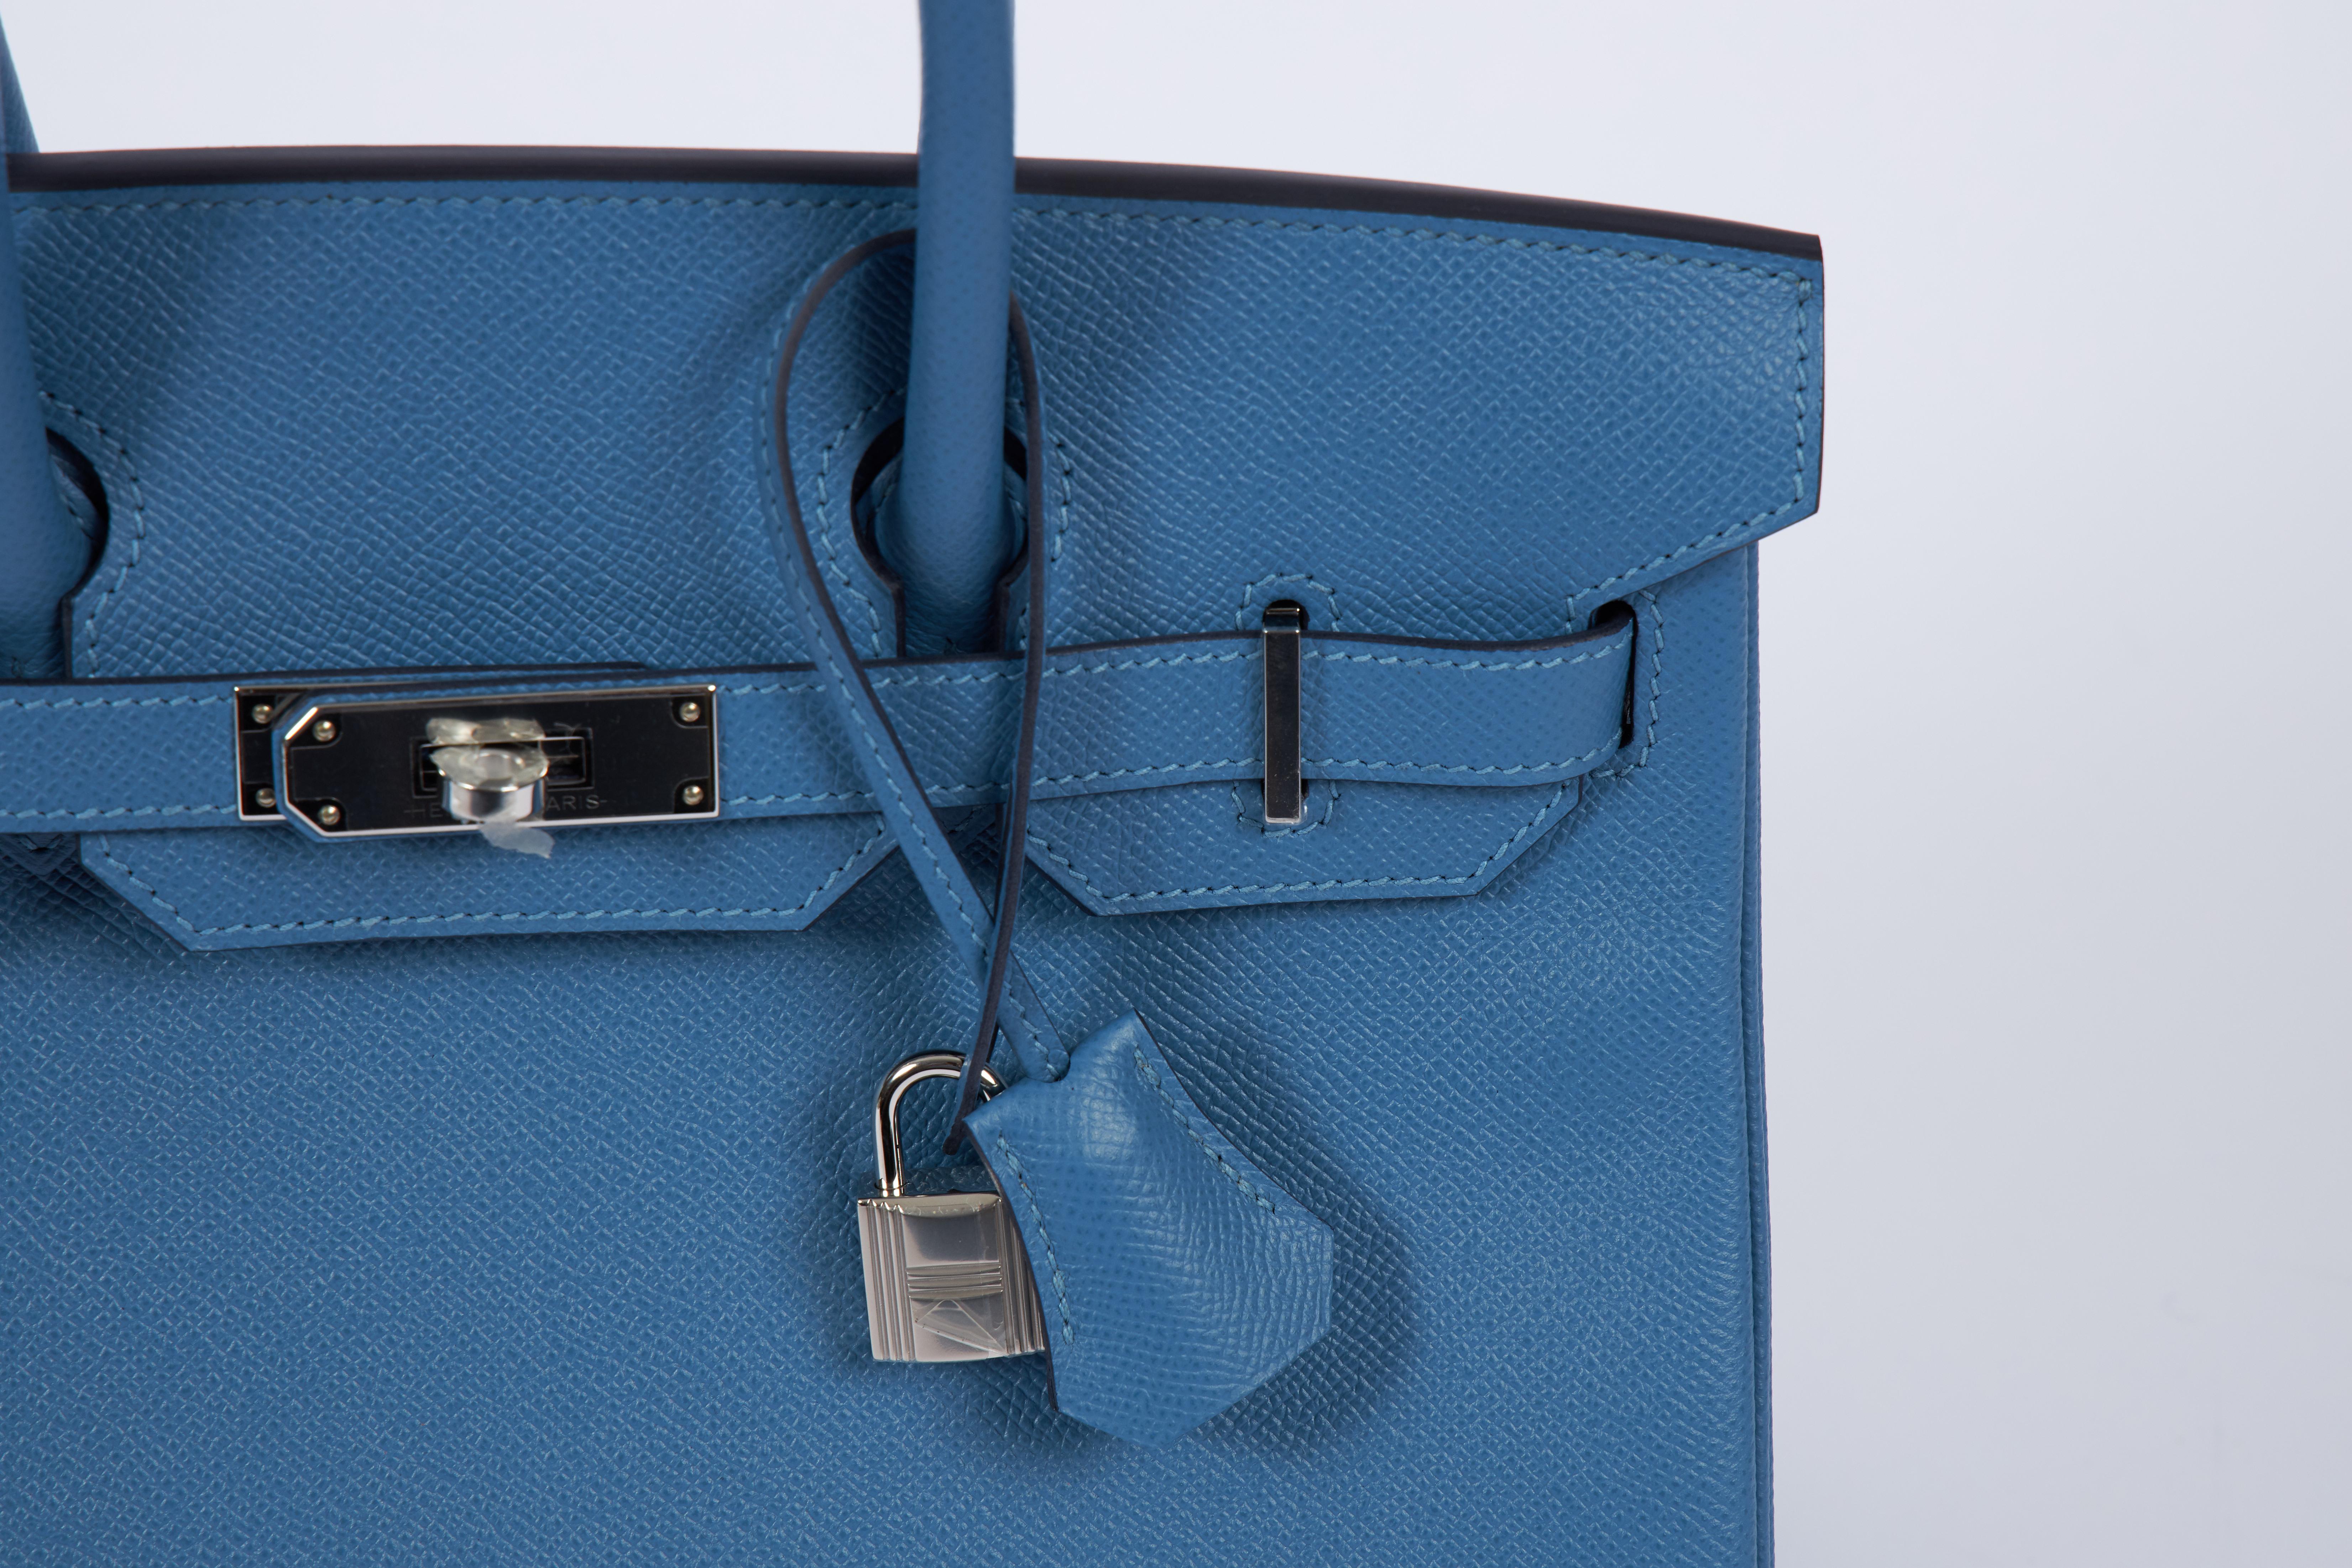 NEW 2018 Hermès 30cm Blue Azur Palladium Birkin Bag in Box 3